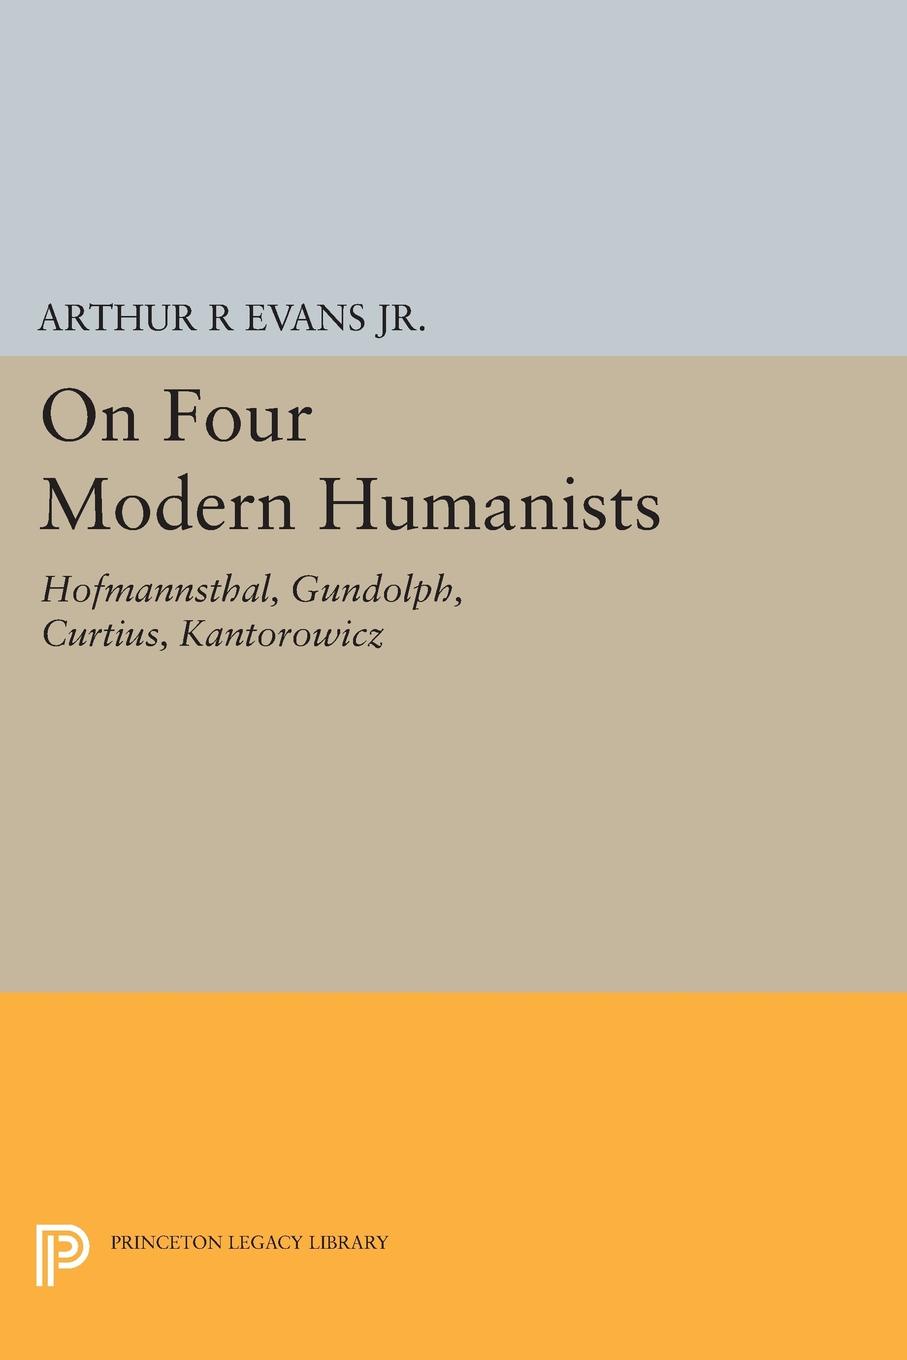 On Four Modern Humanists. Hofmannsthal, Gundolph, Curtius, Kantorowicz